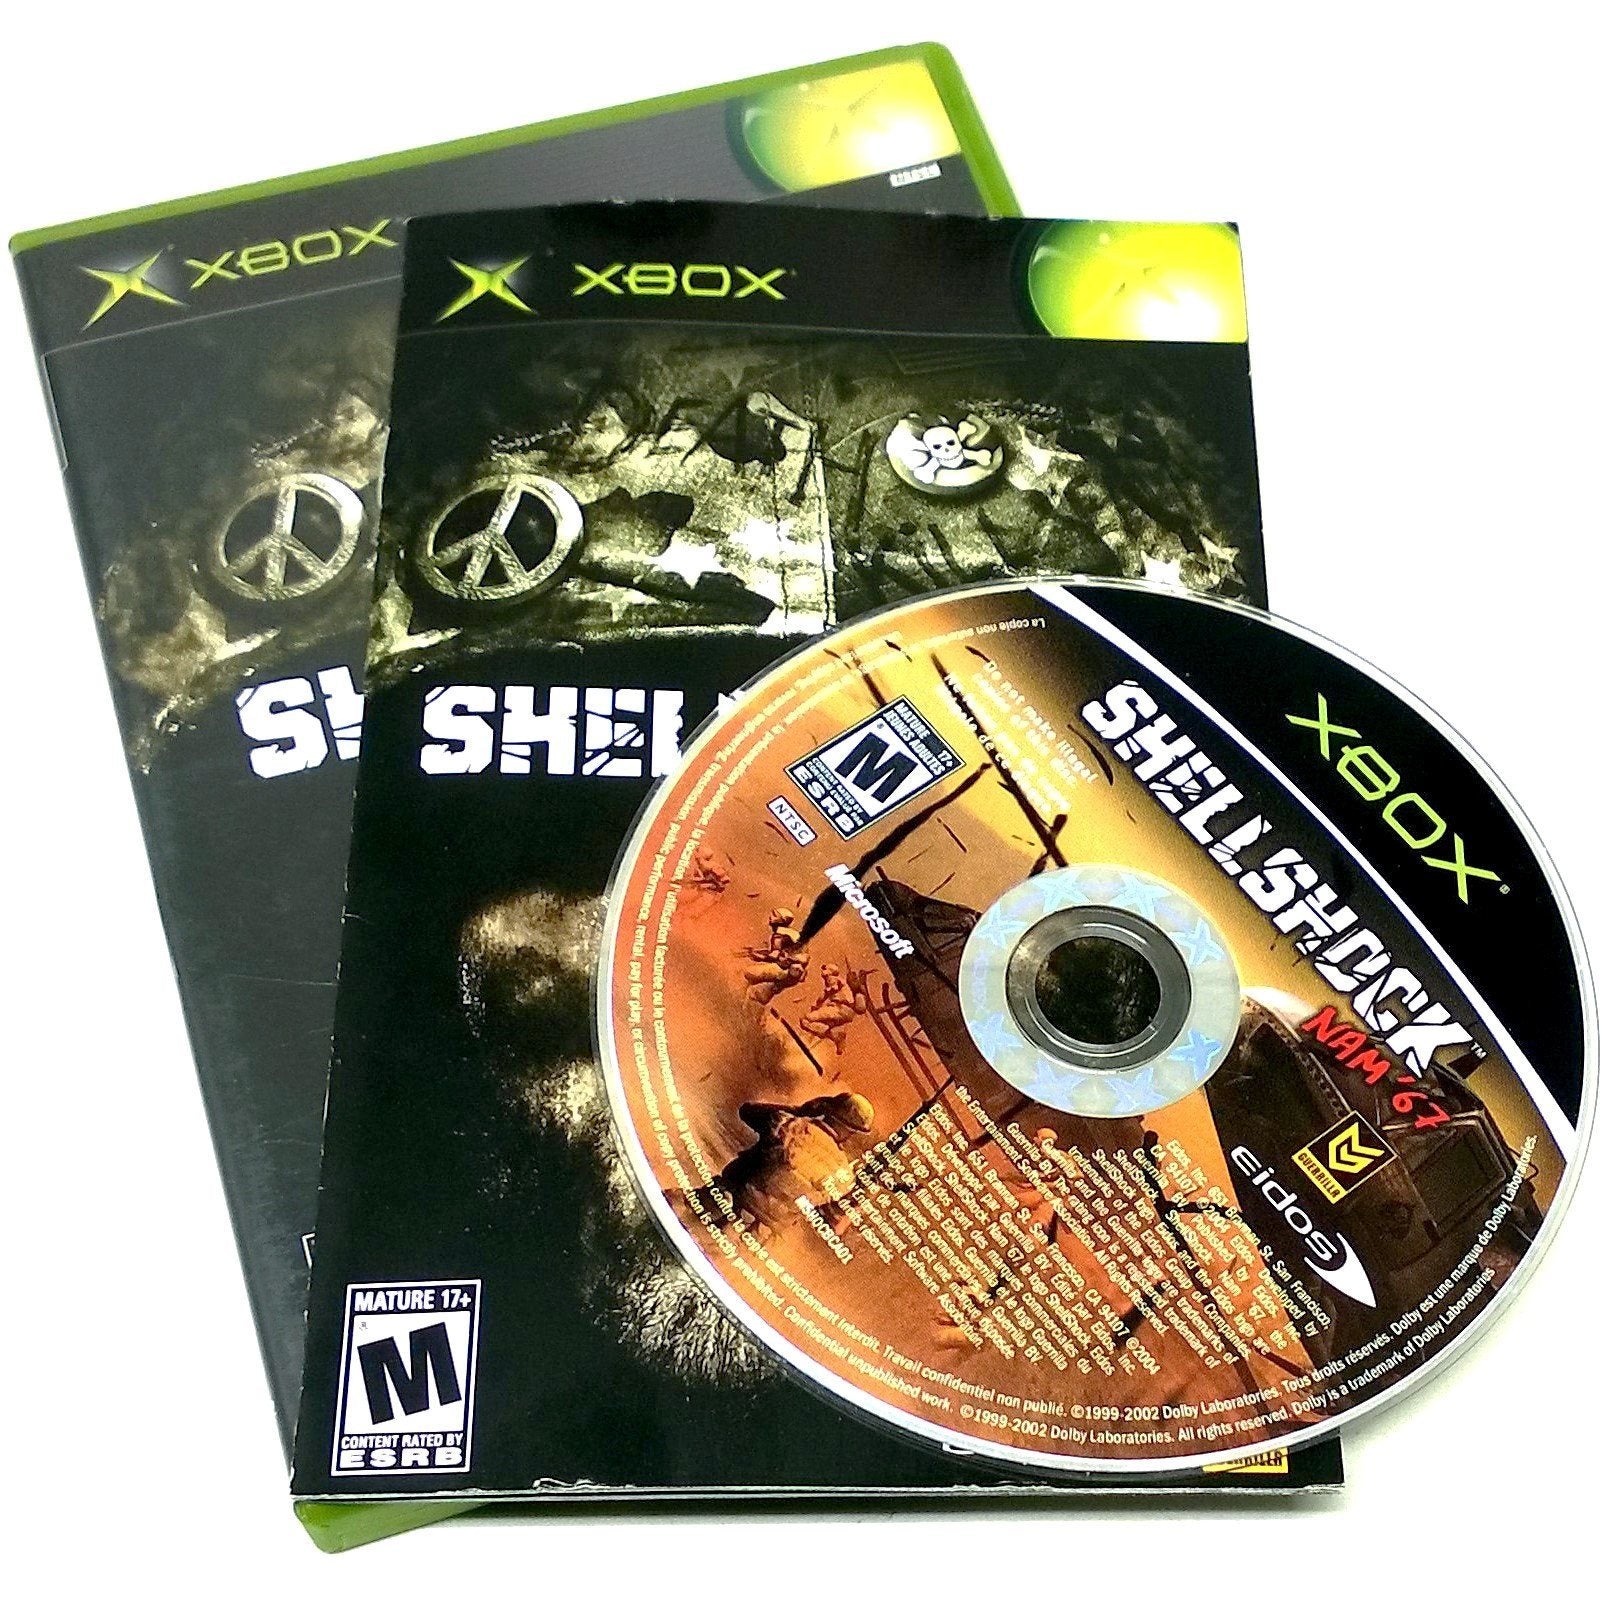 FABLE & SHELLSHOCK Nam 67 - Original Xbox Manuals Only $9.81 - PicClick AU